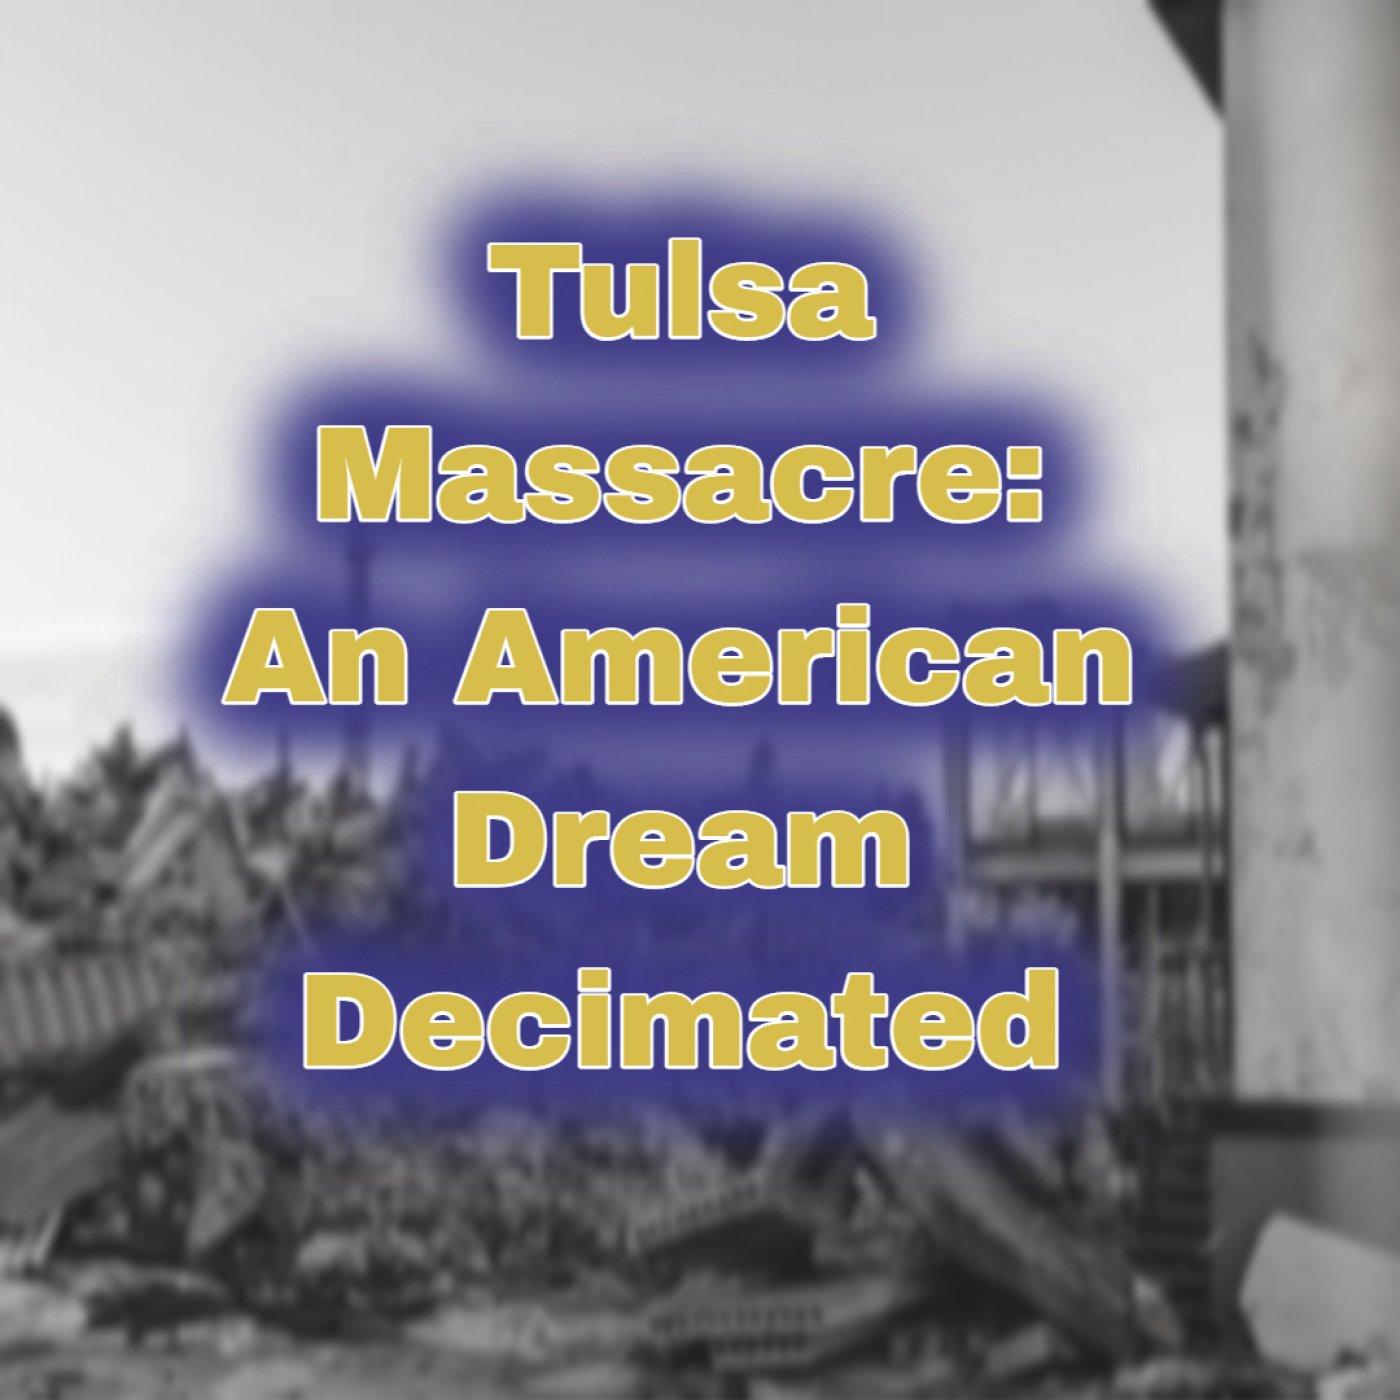 Thumbnail for "Tulsa Massacre: An American Dream Decimated".